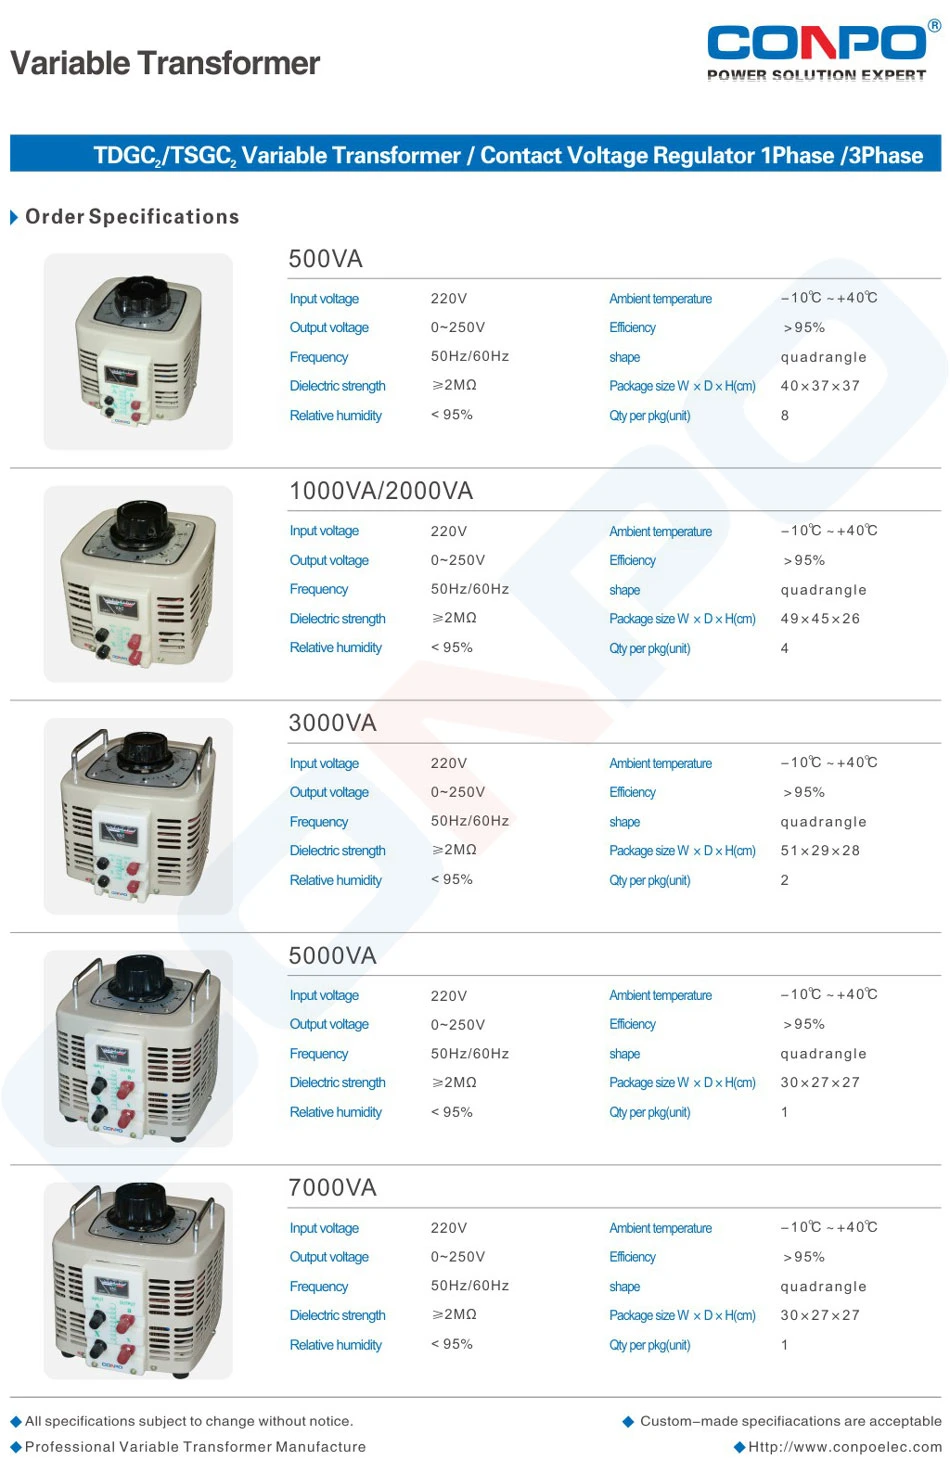 Tdgc2-1000va 1phase Contact Voltage Regulator/Variable Transformer